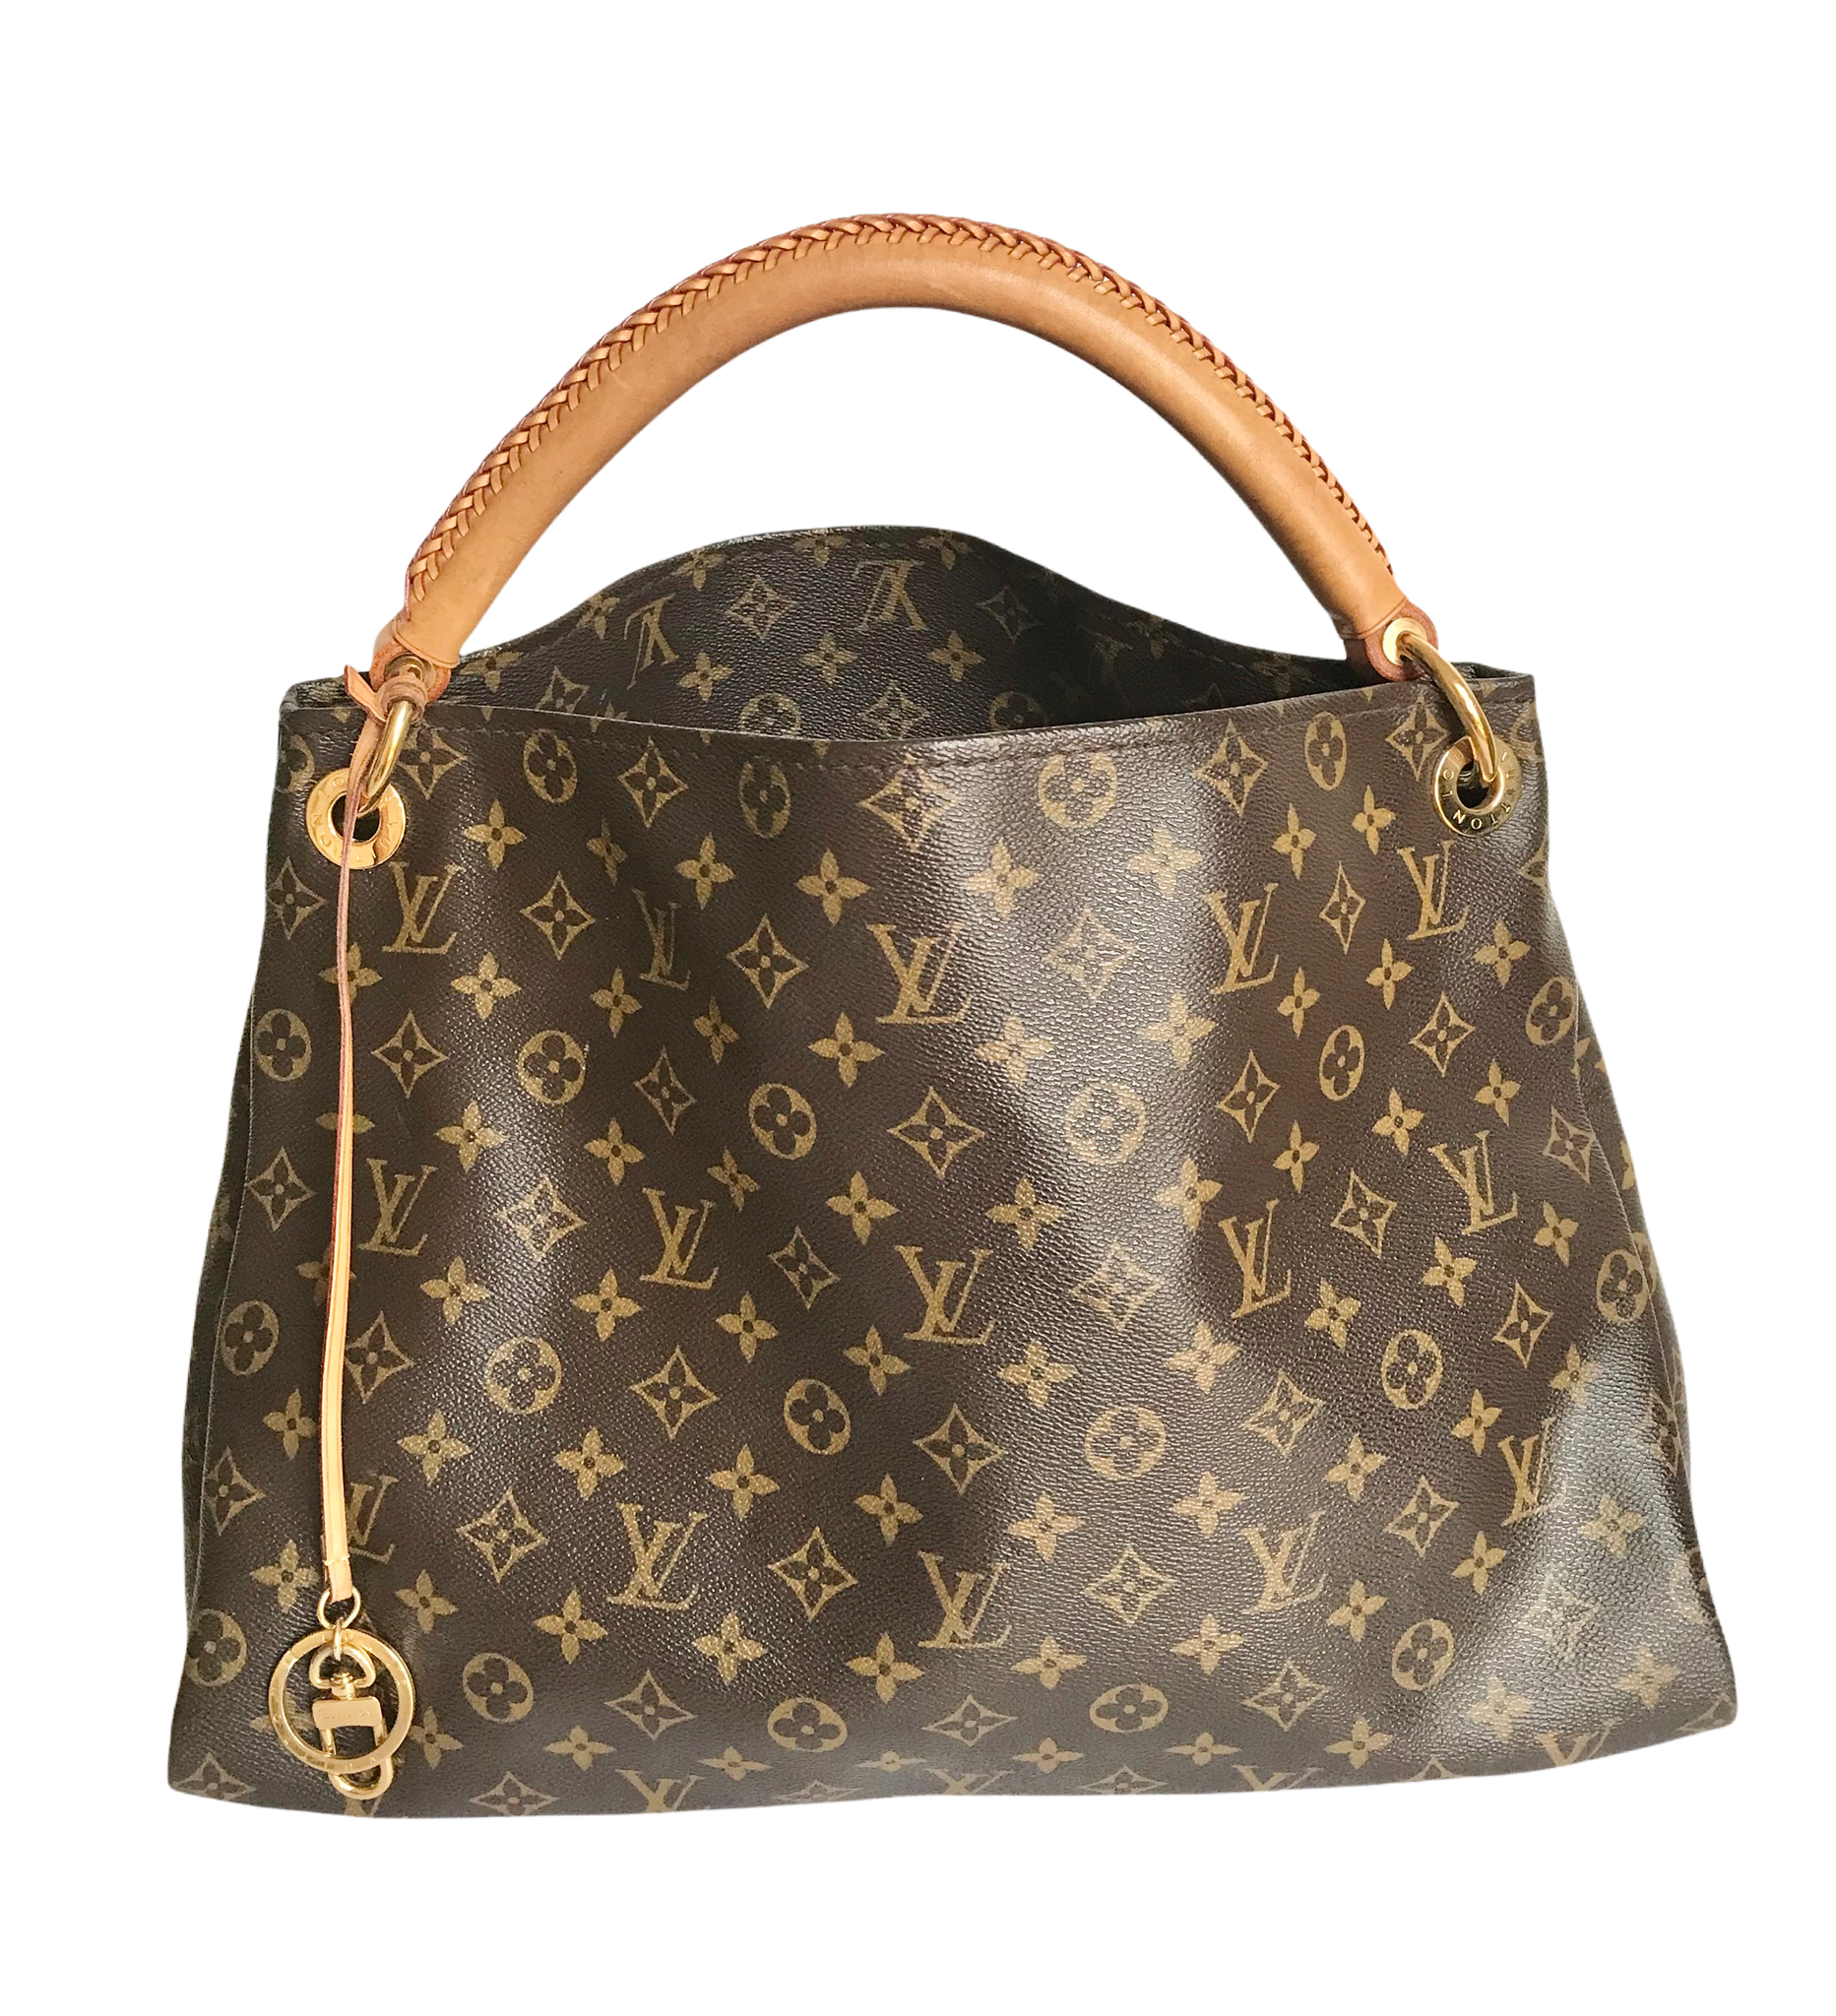 Authentic Louis Vuitton Monogram Artsy MM Hobo Bag M40249